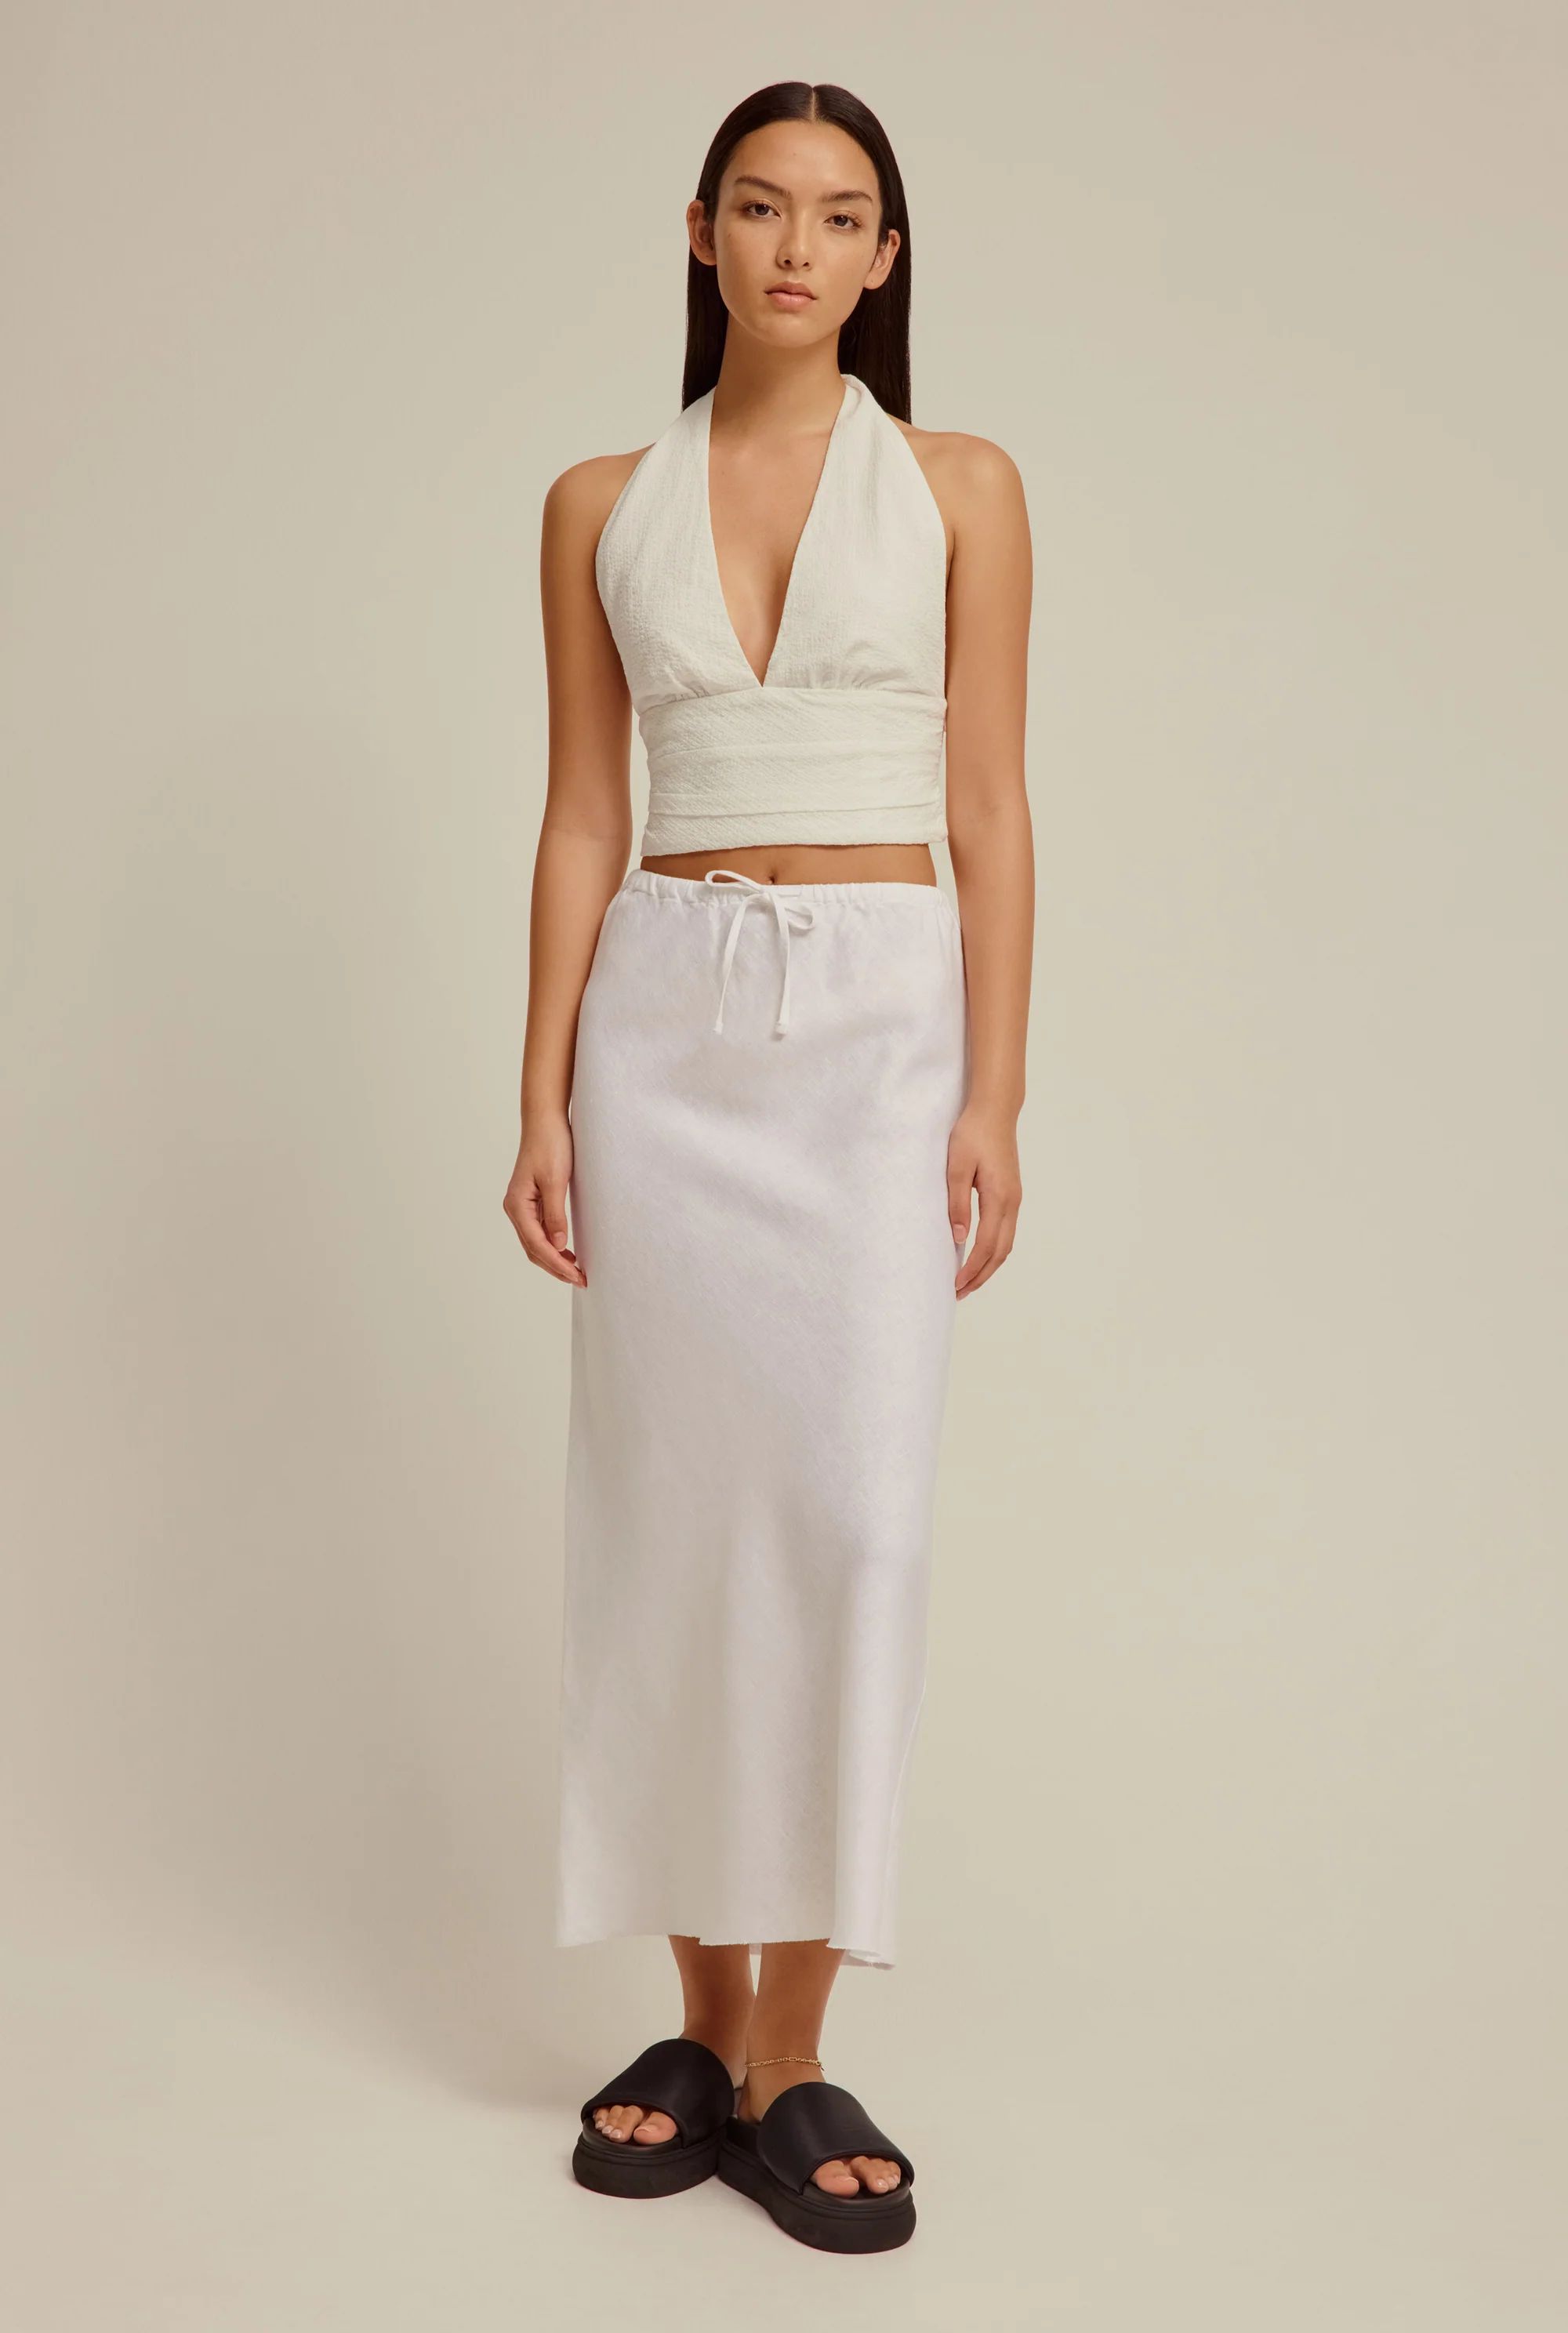 Drawstring Bias Skirt in White | Venroy | Premium Leisurewear designed in Australia | Venroy AU